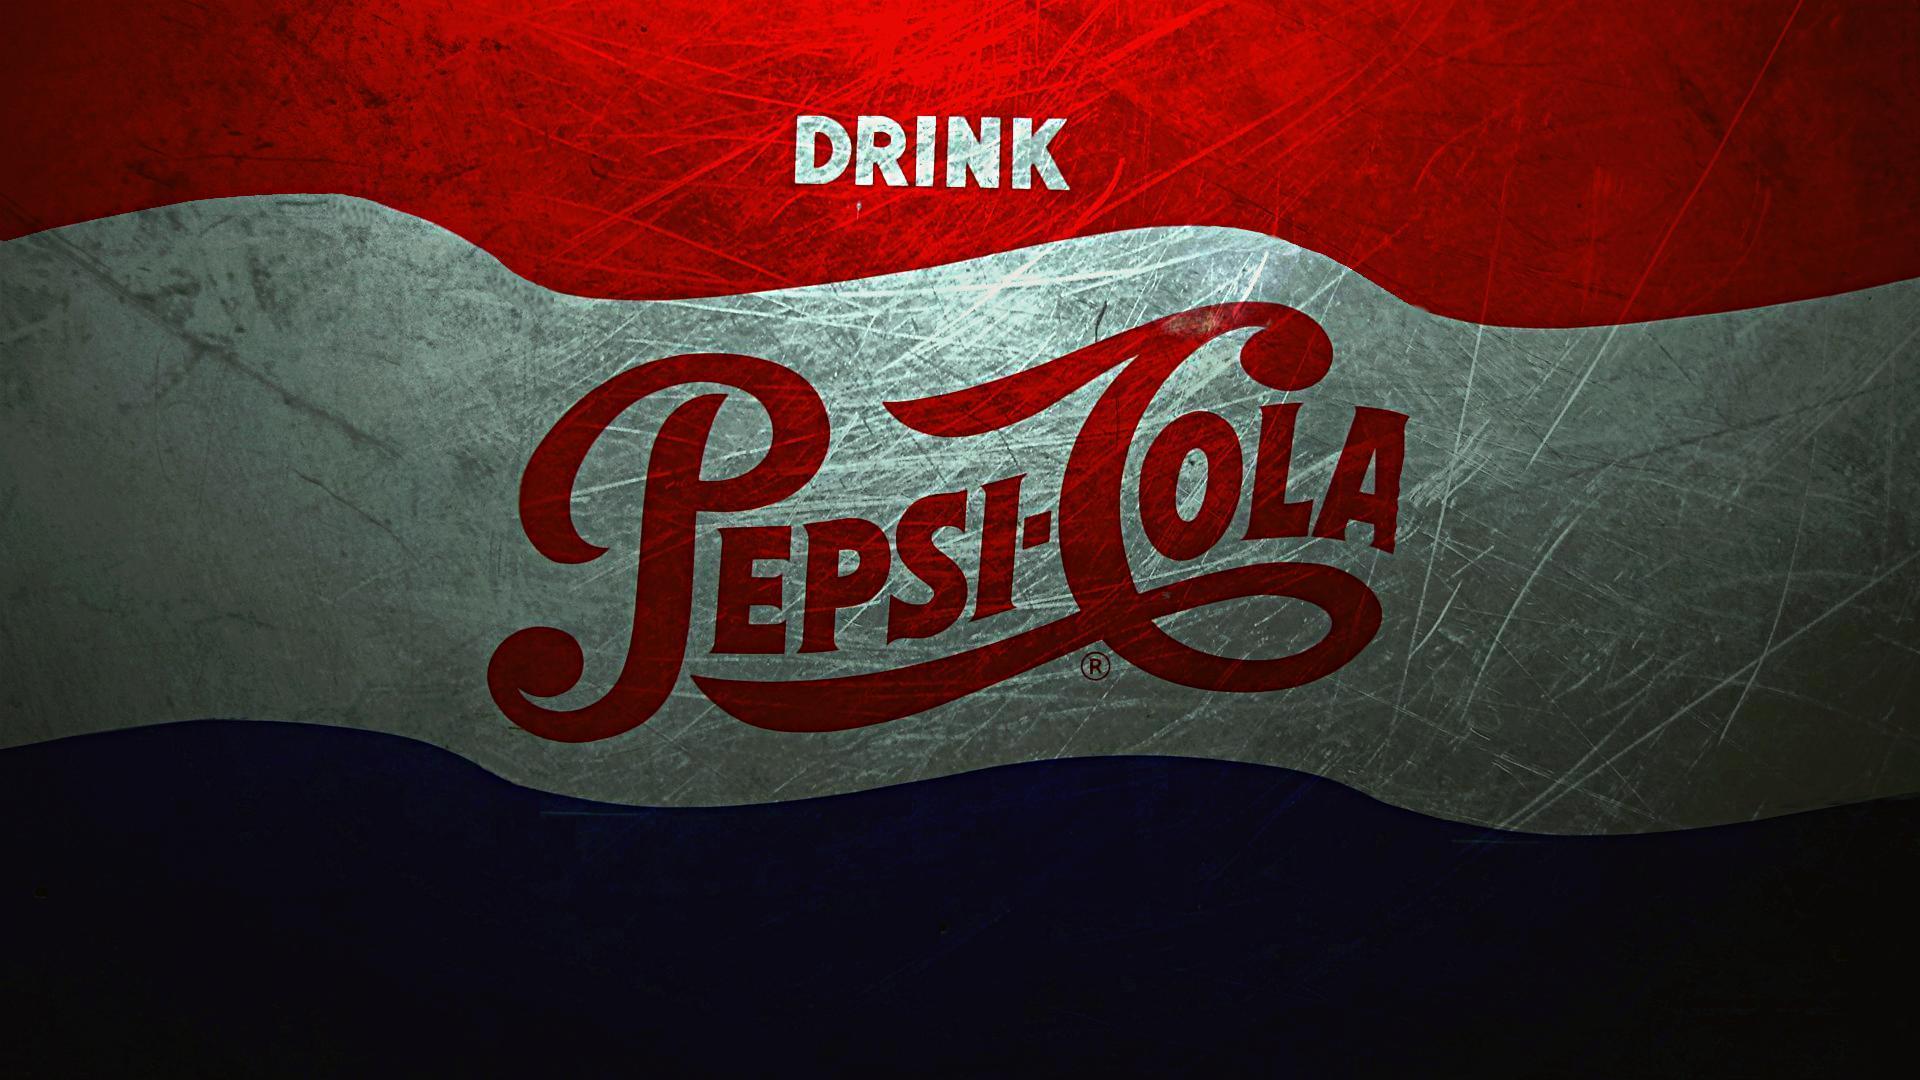 Pepsi Cola Wallpaper. Pepsi Cola Background